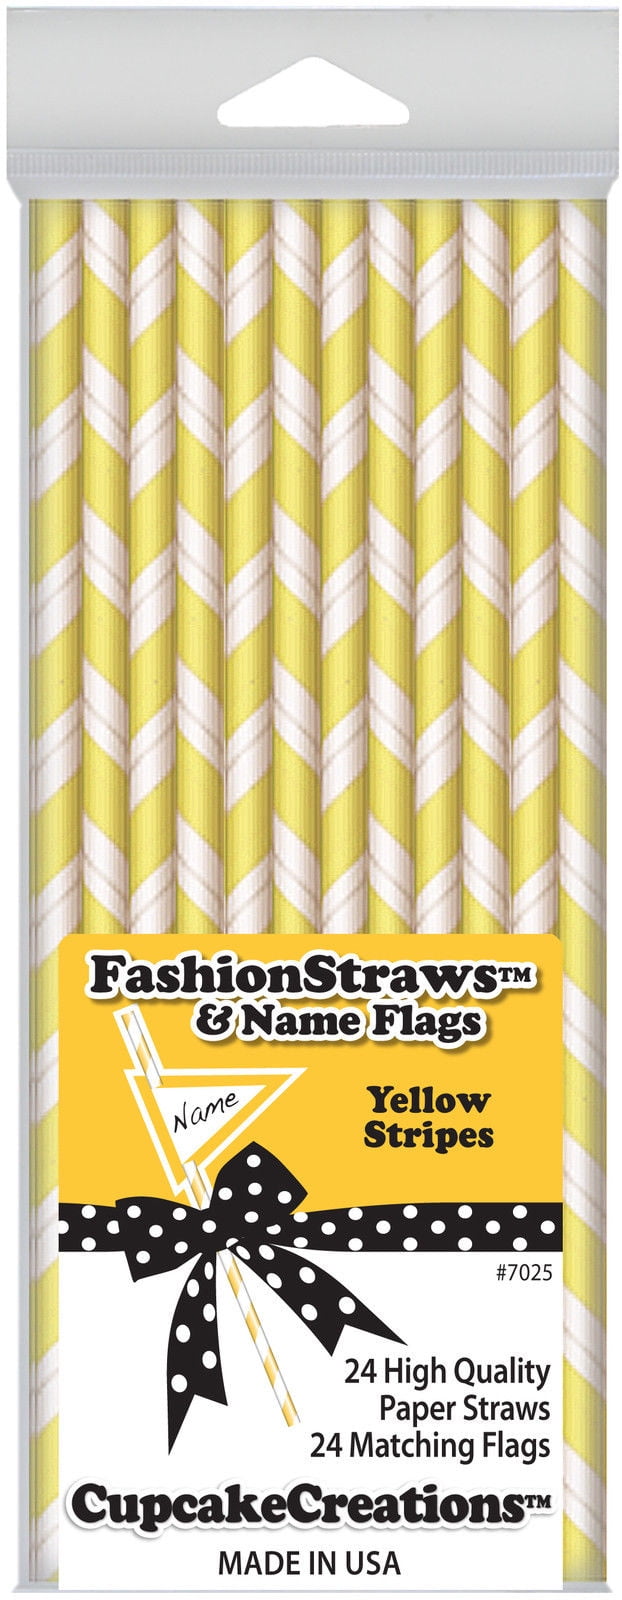 7025 24 Pk Cupcake Creations Fashion Straws & Name Flags Yellow Stripes 